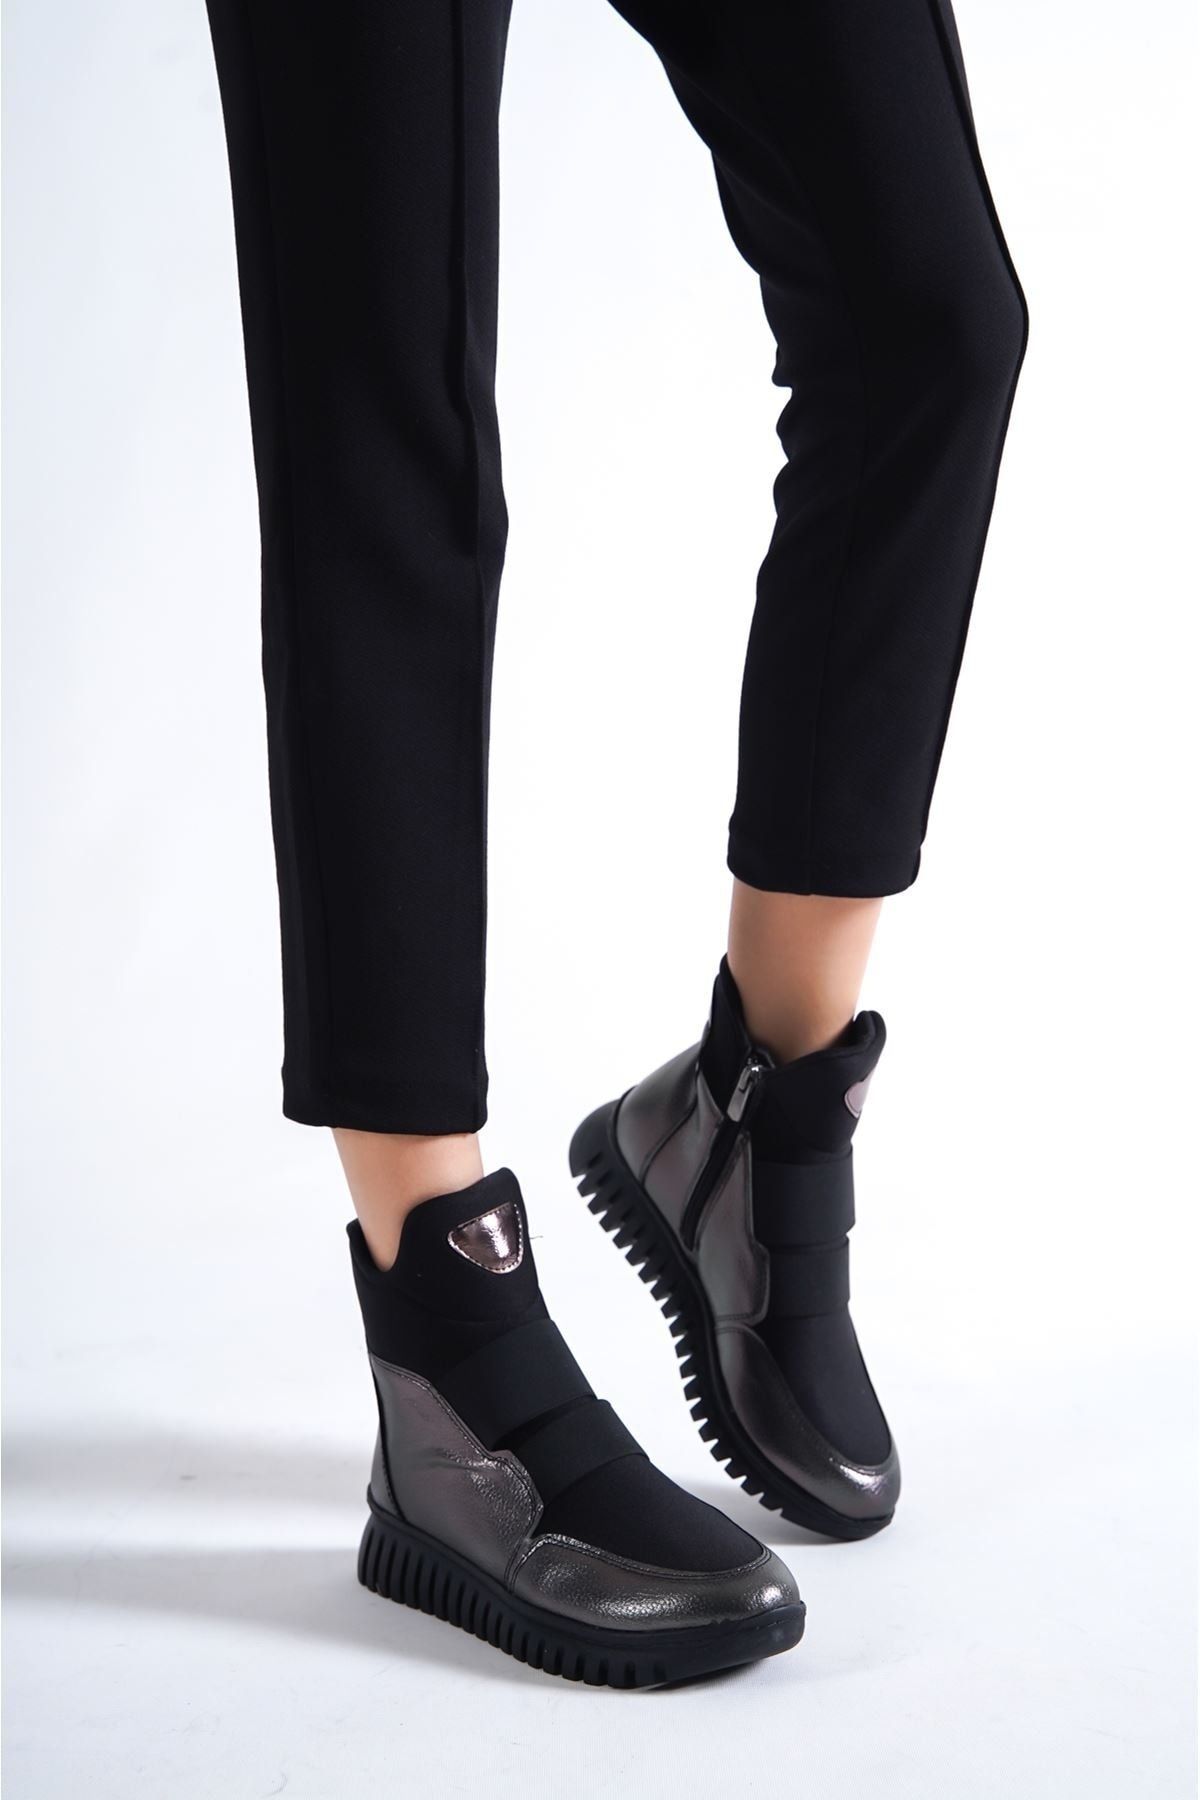 sedose shoes accessories Kadın Spor Bot&bootie&postal